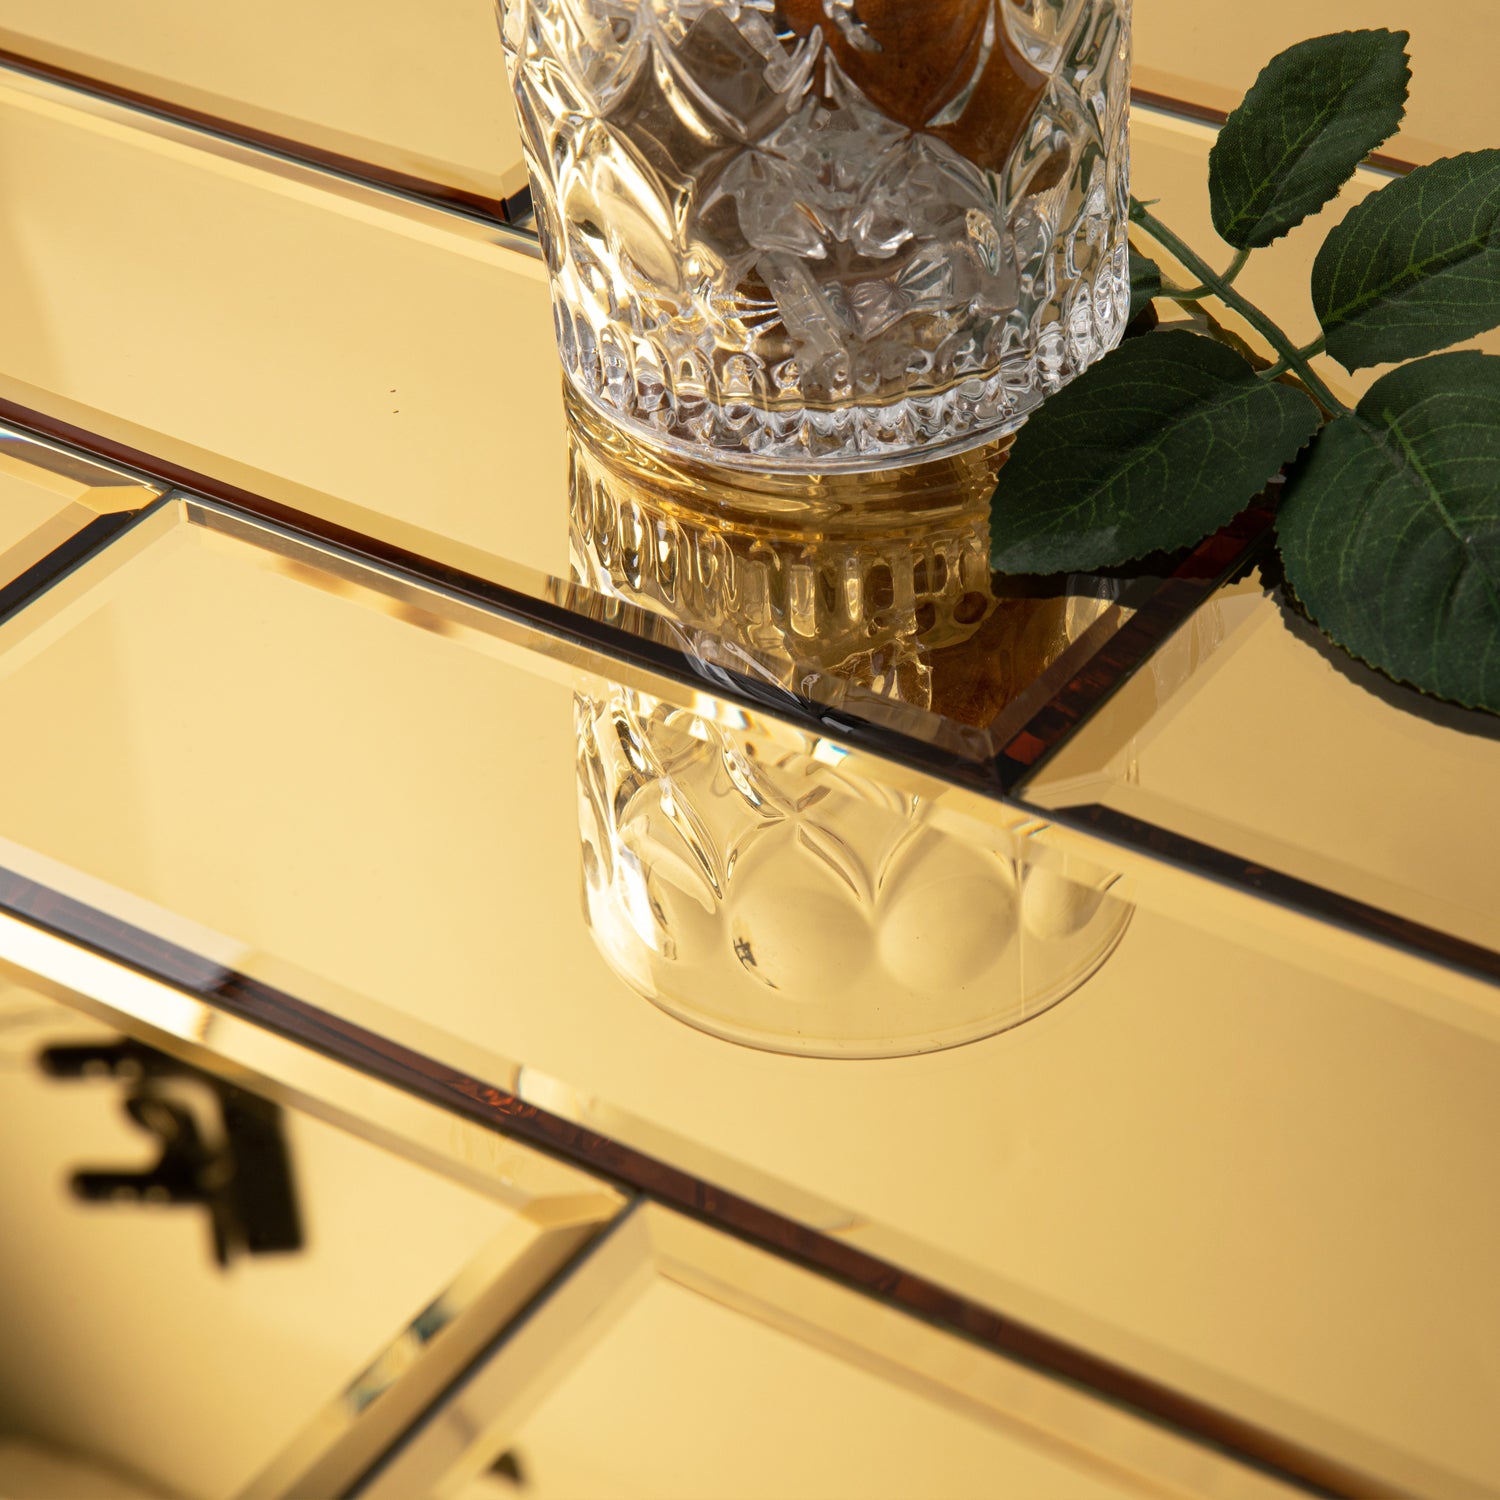 Beveled Gold Mirror Backsplash Subway Tiles 4x12 Inch Peel and Stick Pack of 15 Pcs